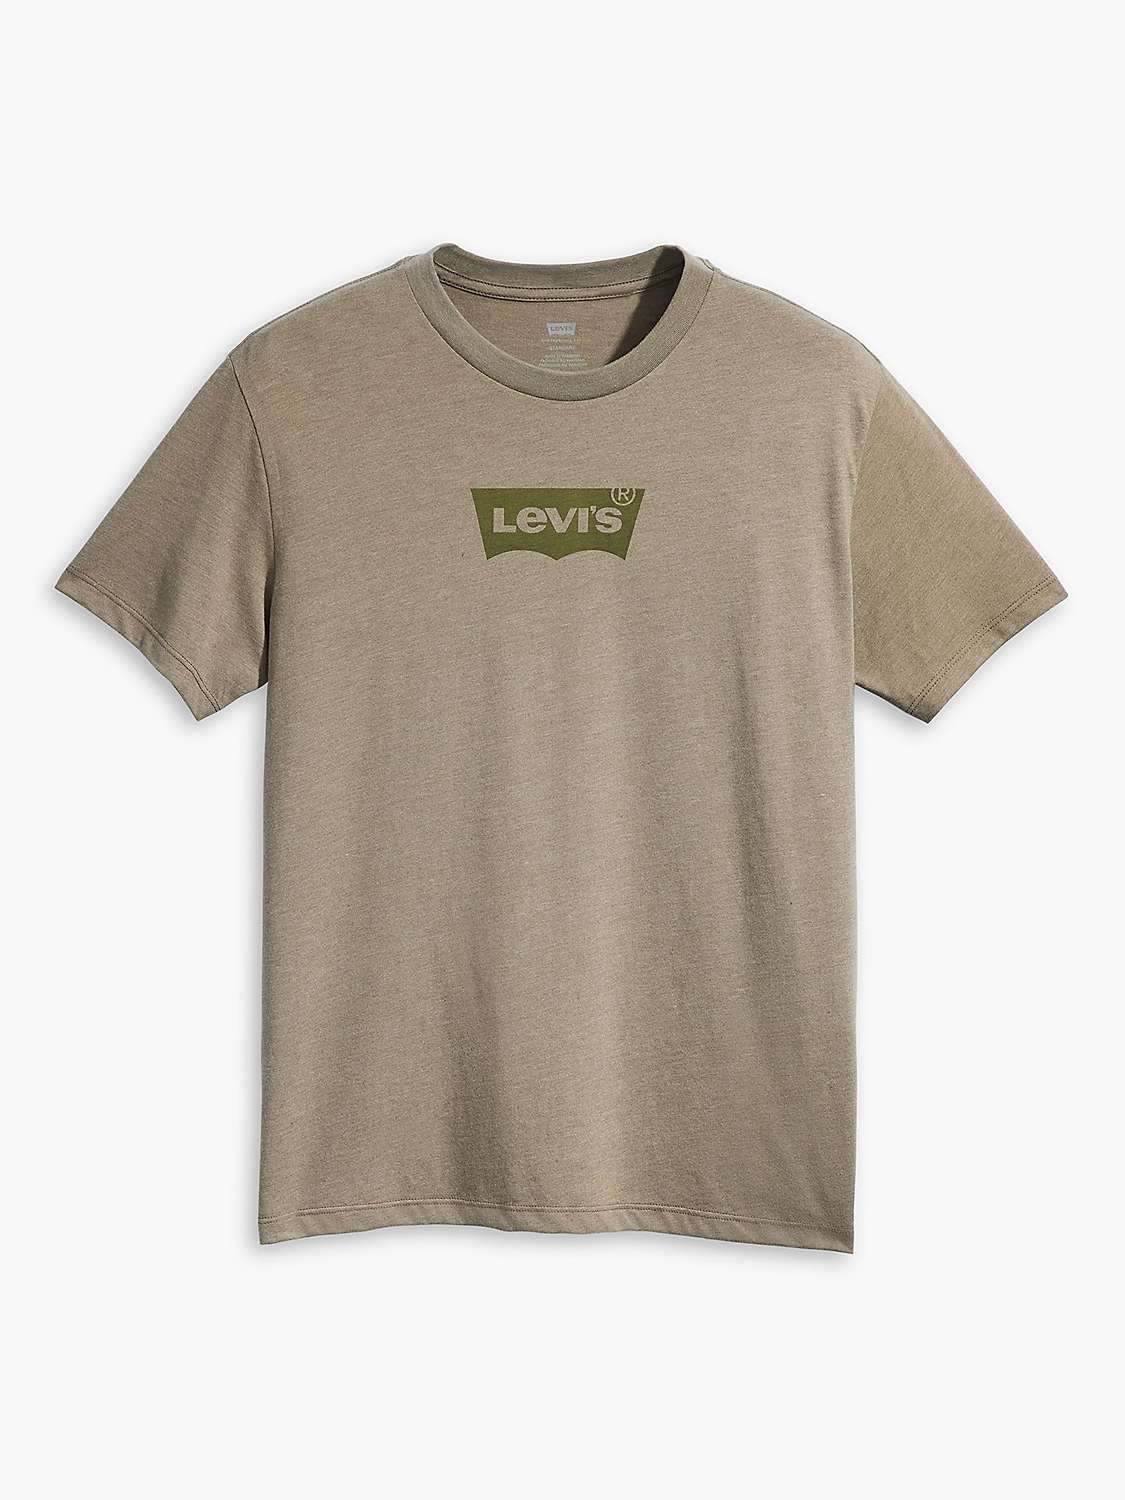 Buy Levi's Graphic Crew Neck T-Shirt, Olive Online at johnlewis.com